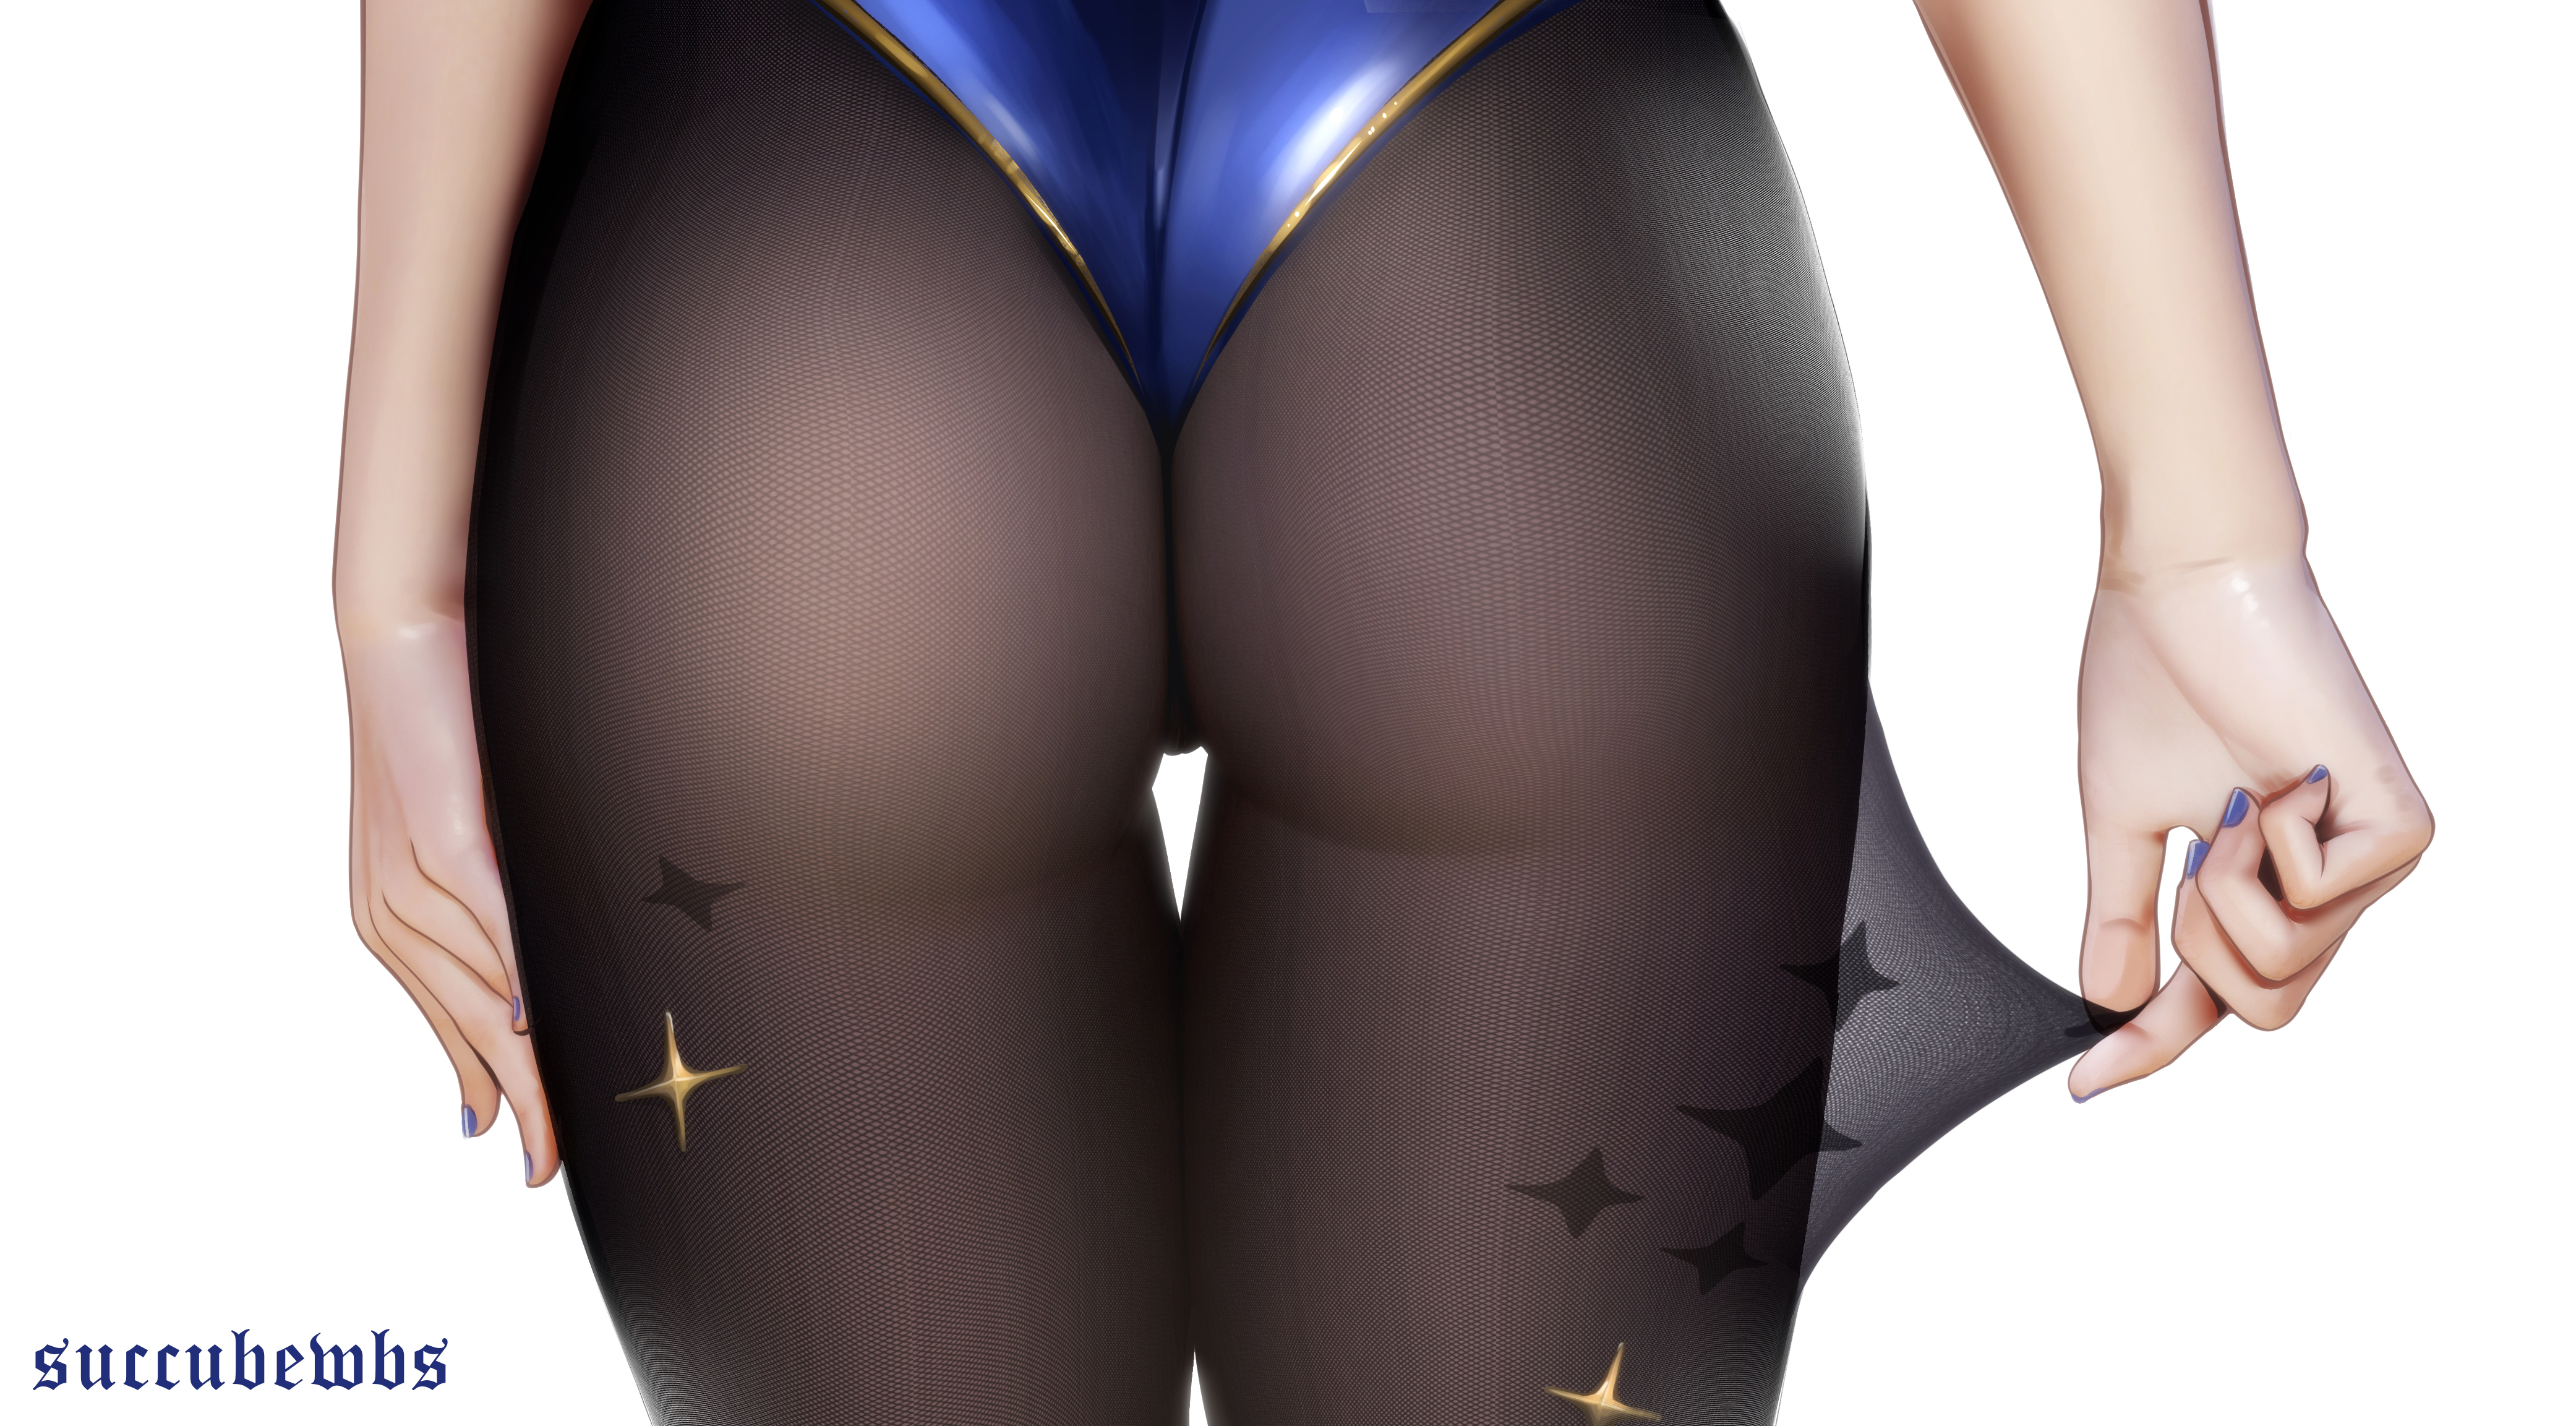 Anime 4165x2305 ass black stockings Mona (Genshin Impact) succubewbs blue nails rear view pulling clothing Genshin Impact anime girls